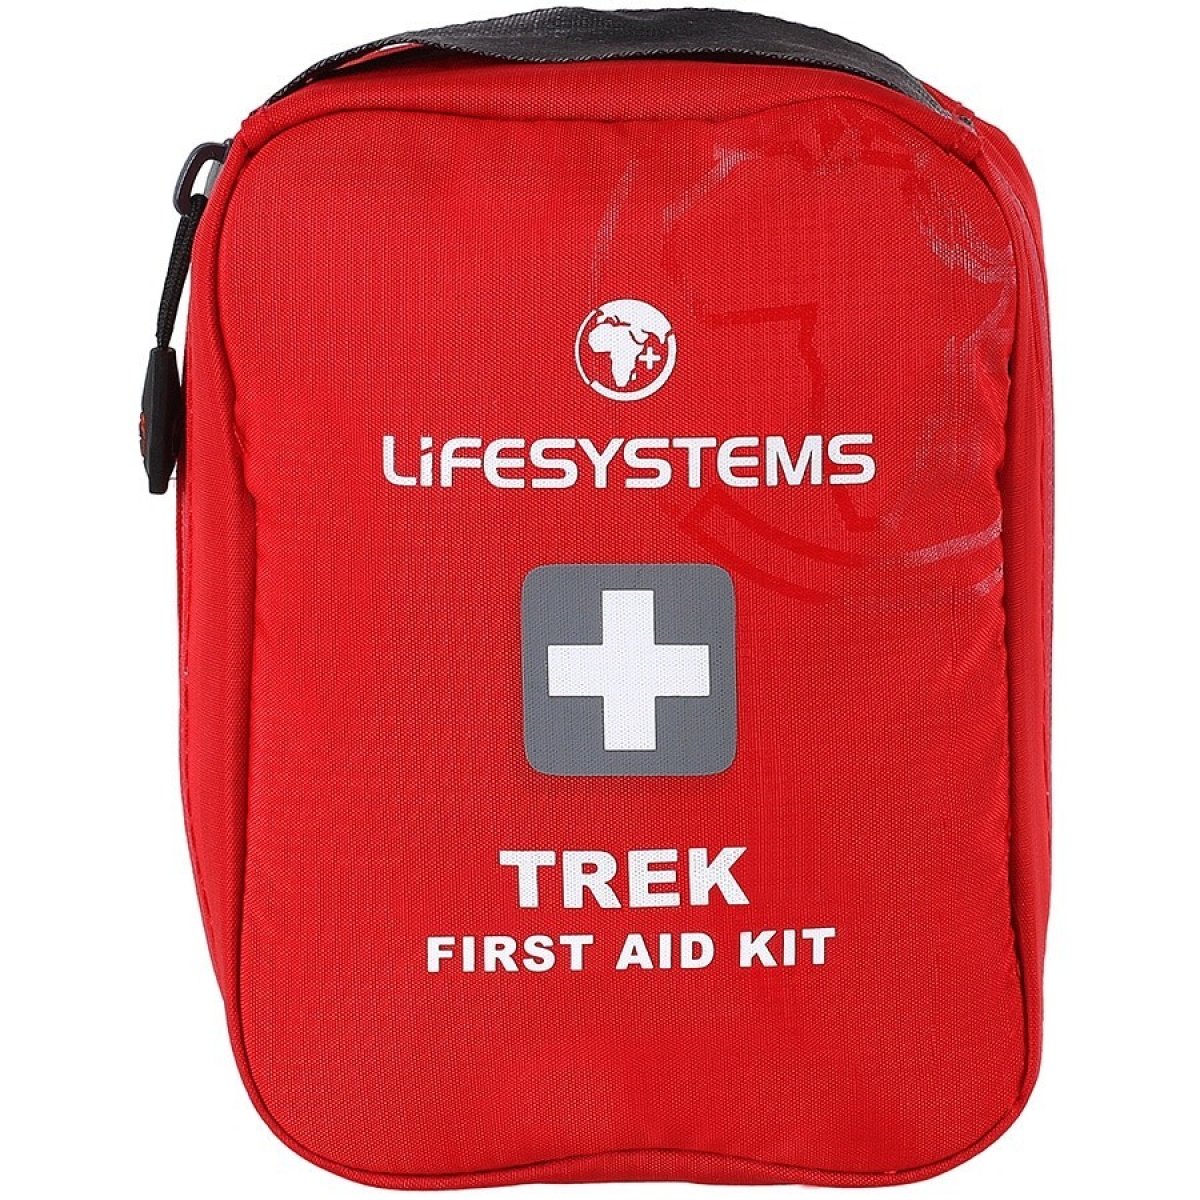 Аптечка Lifesystems Trek First Aid Kit 1025